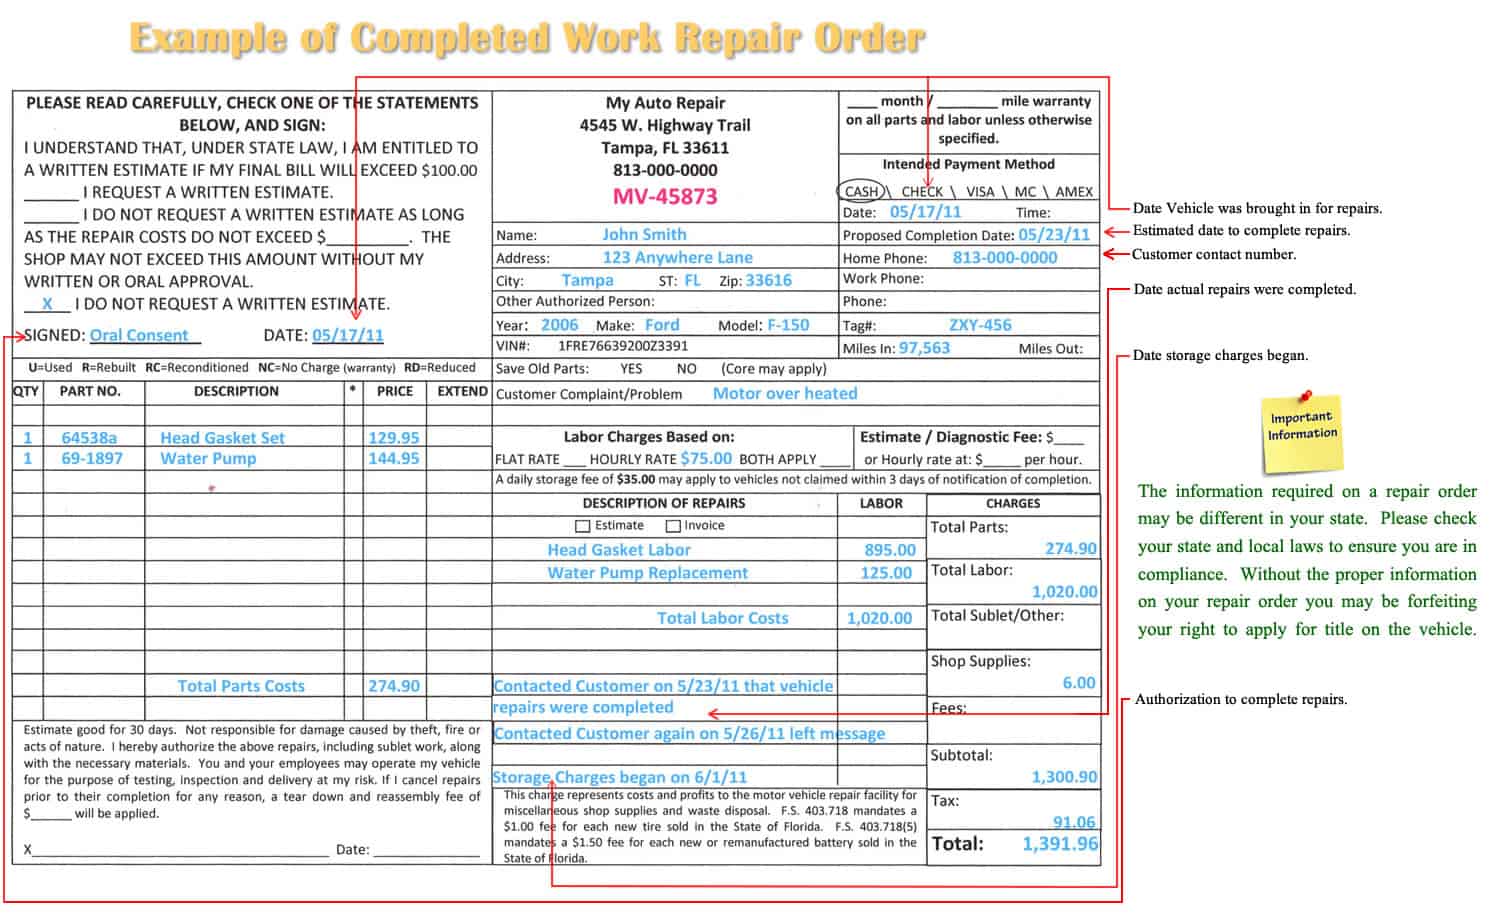 auto-repair-mechanic-lien-send-your-repair-order-snickfish-llc